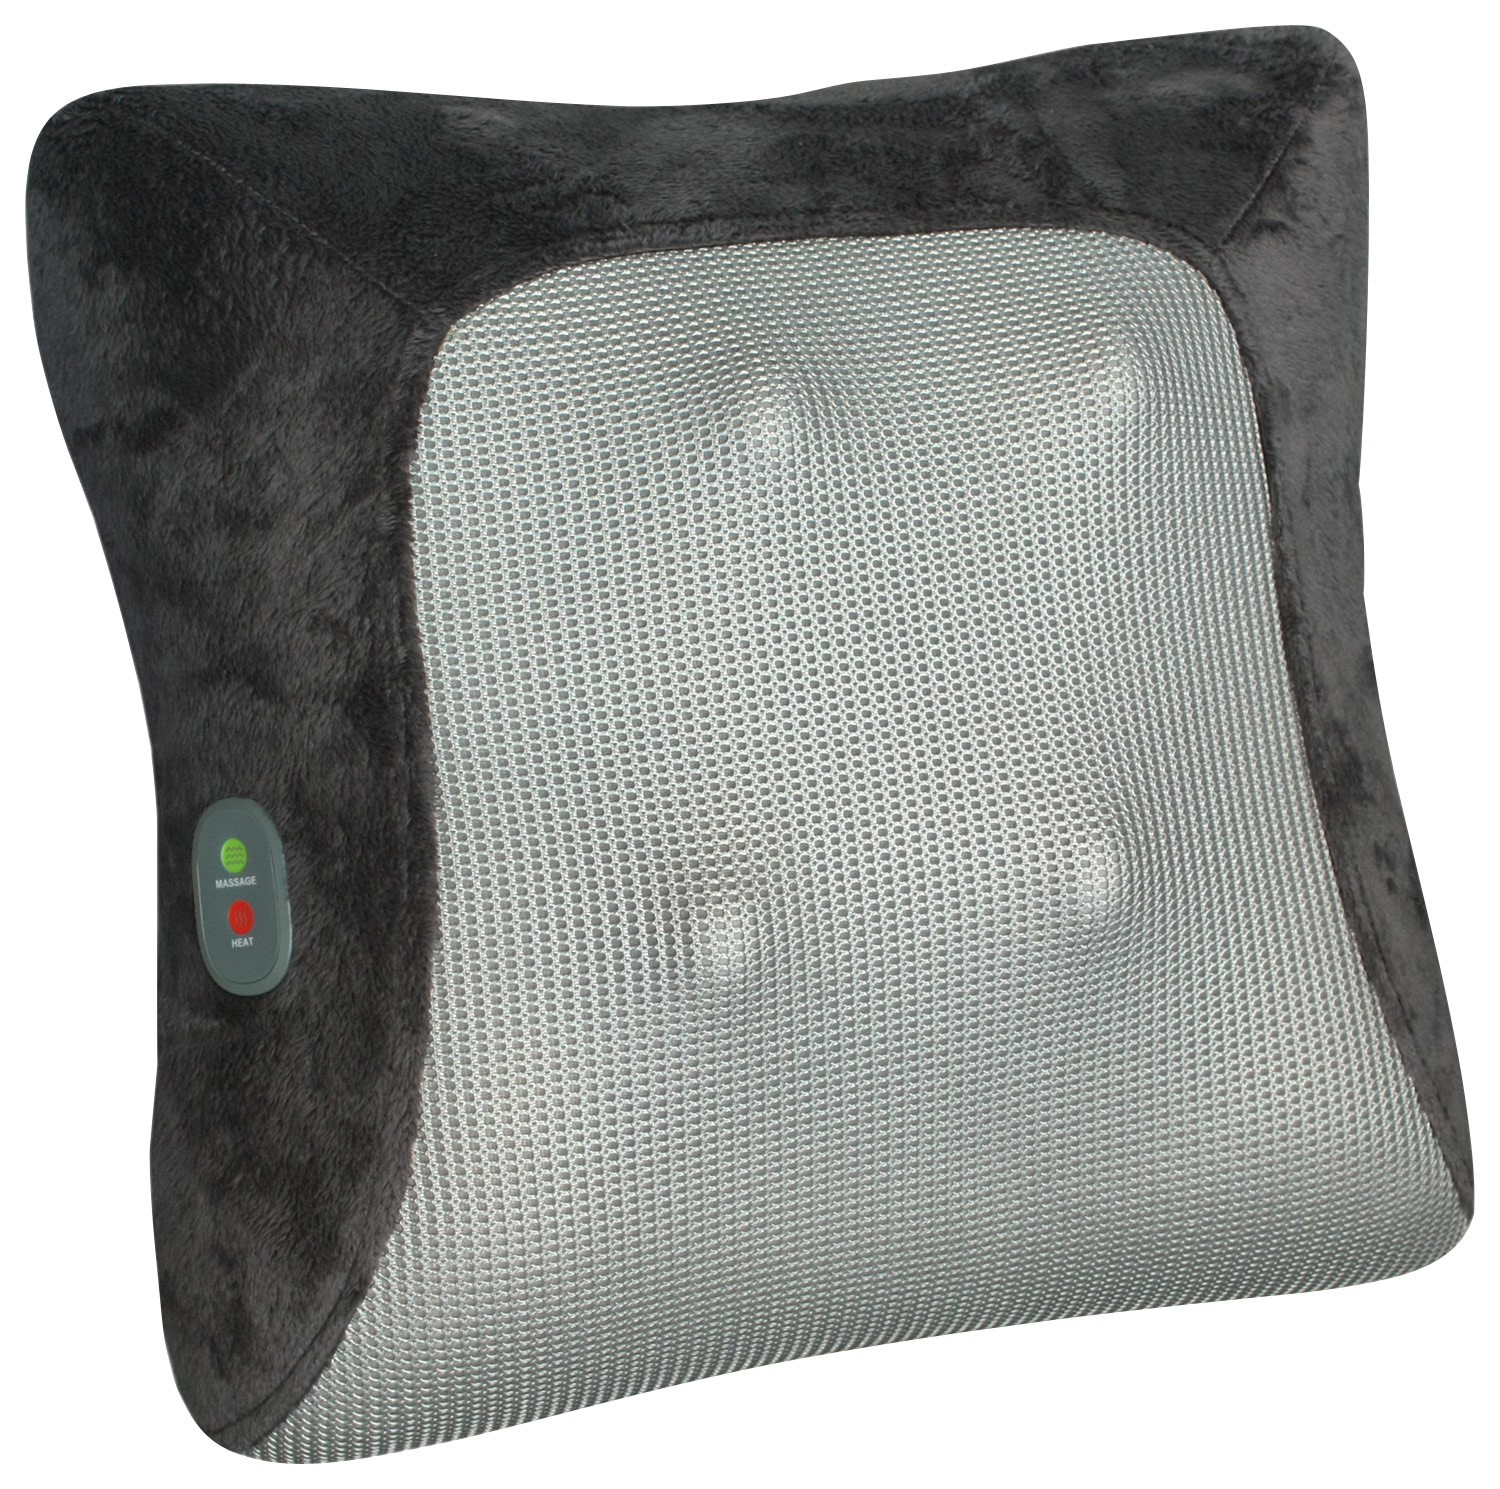  Comfort Products Inc. - Heated Shiatsu Massager - Gray